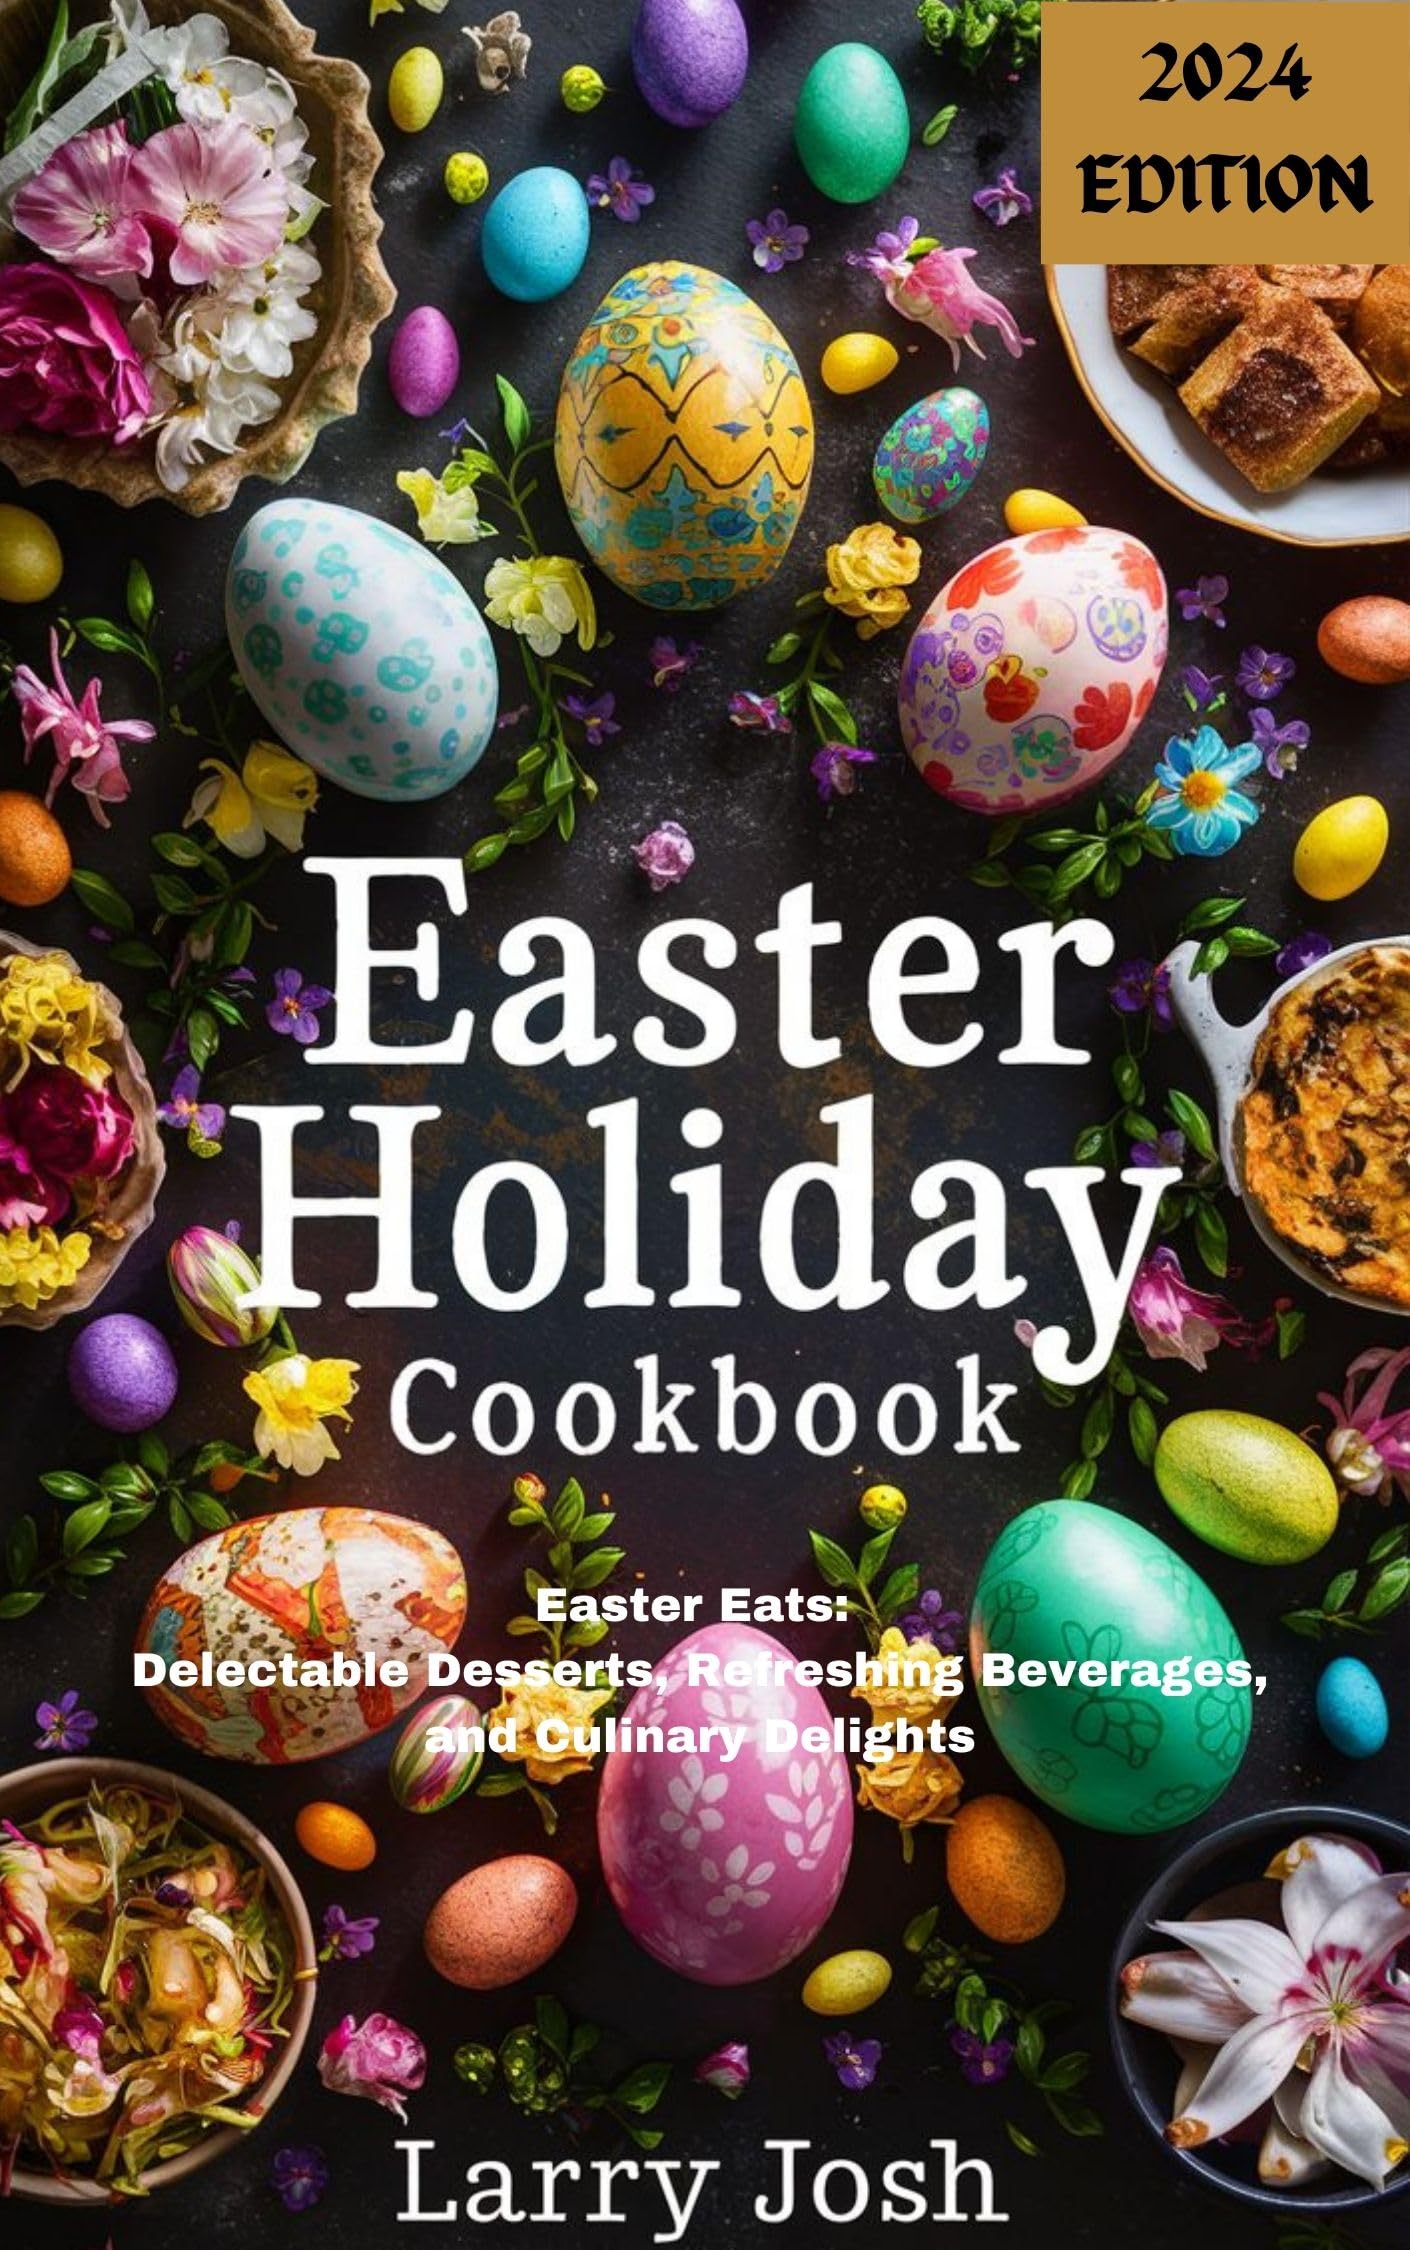 Free Amazon Cookbooks: Easter, Vintage, Copycat, Mexican, French Bistro, Slow Cooker, Soup, Picnic, Pancake, Vitamix, Air Fry, Poland, Korean, Ramen, Asian, Indian, Pizza, MORE !!!